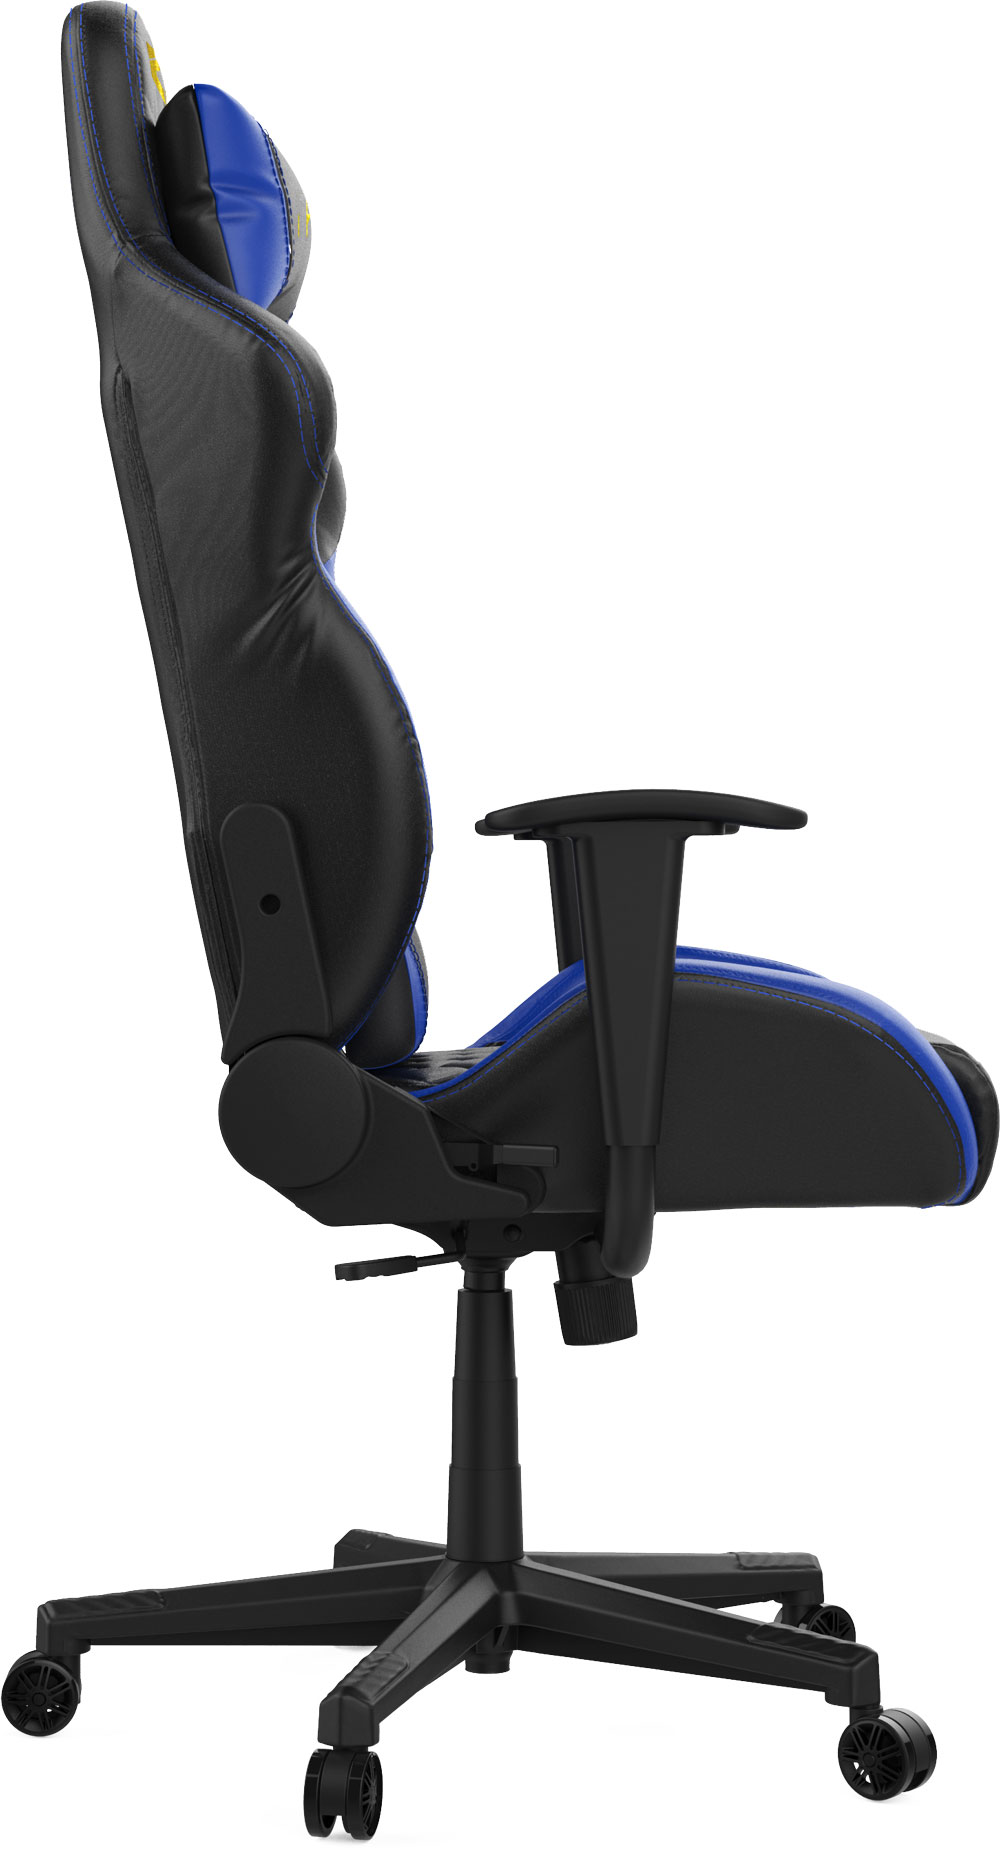 Evetech IKon-Shift-300 Gaming Chair - Black/Blue